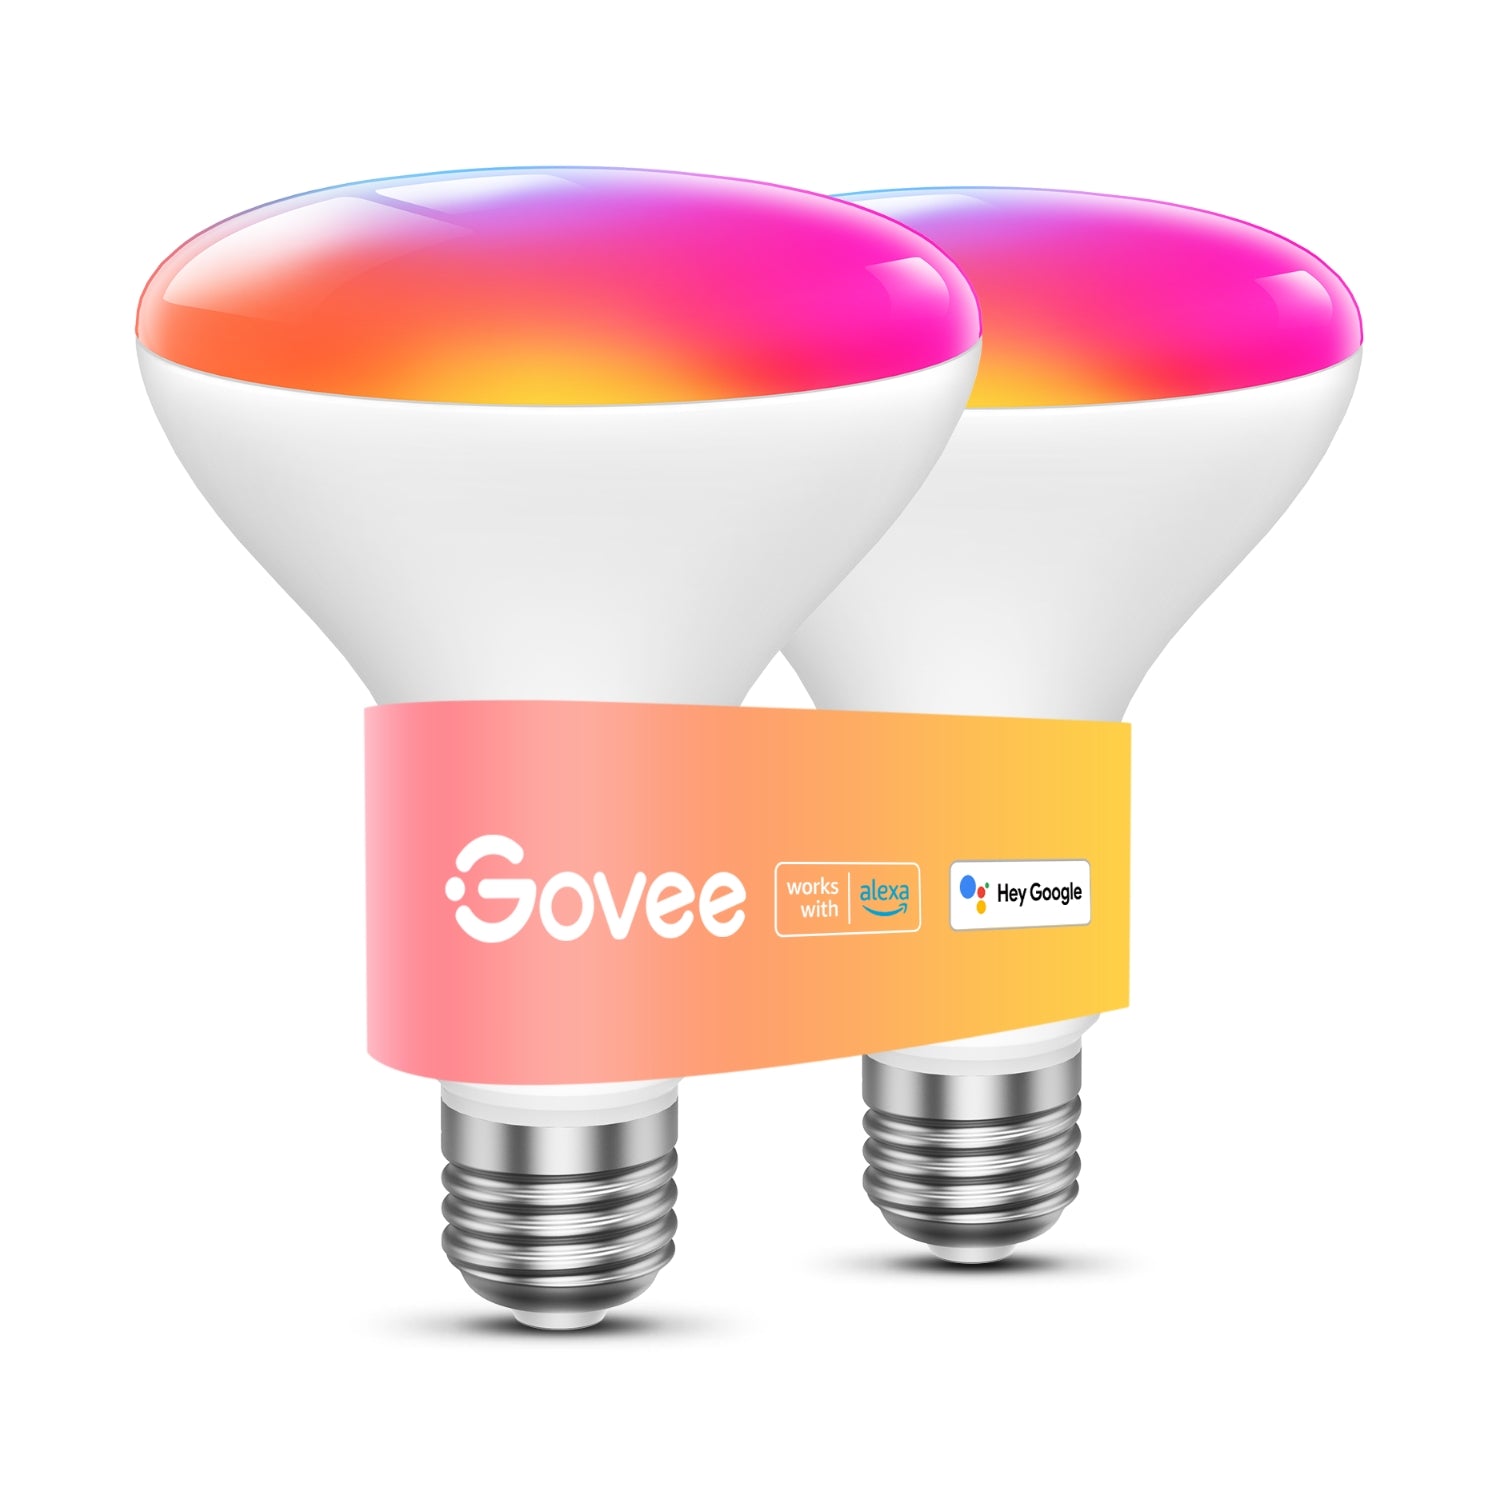 Govee RGBWW Smart WiFi/Bluetooth, BR30 LED Light Bulbs, 1200 Lumens, H6010, 1 Pack $13.20/ 2 Packs $25.52, Google/Alexa, Free Shipping